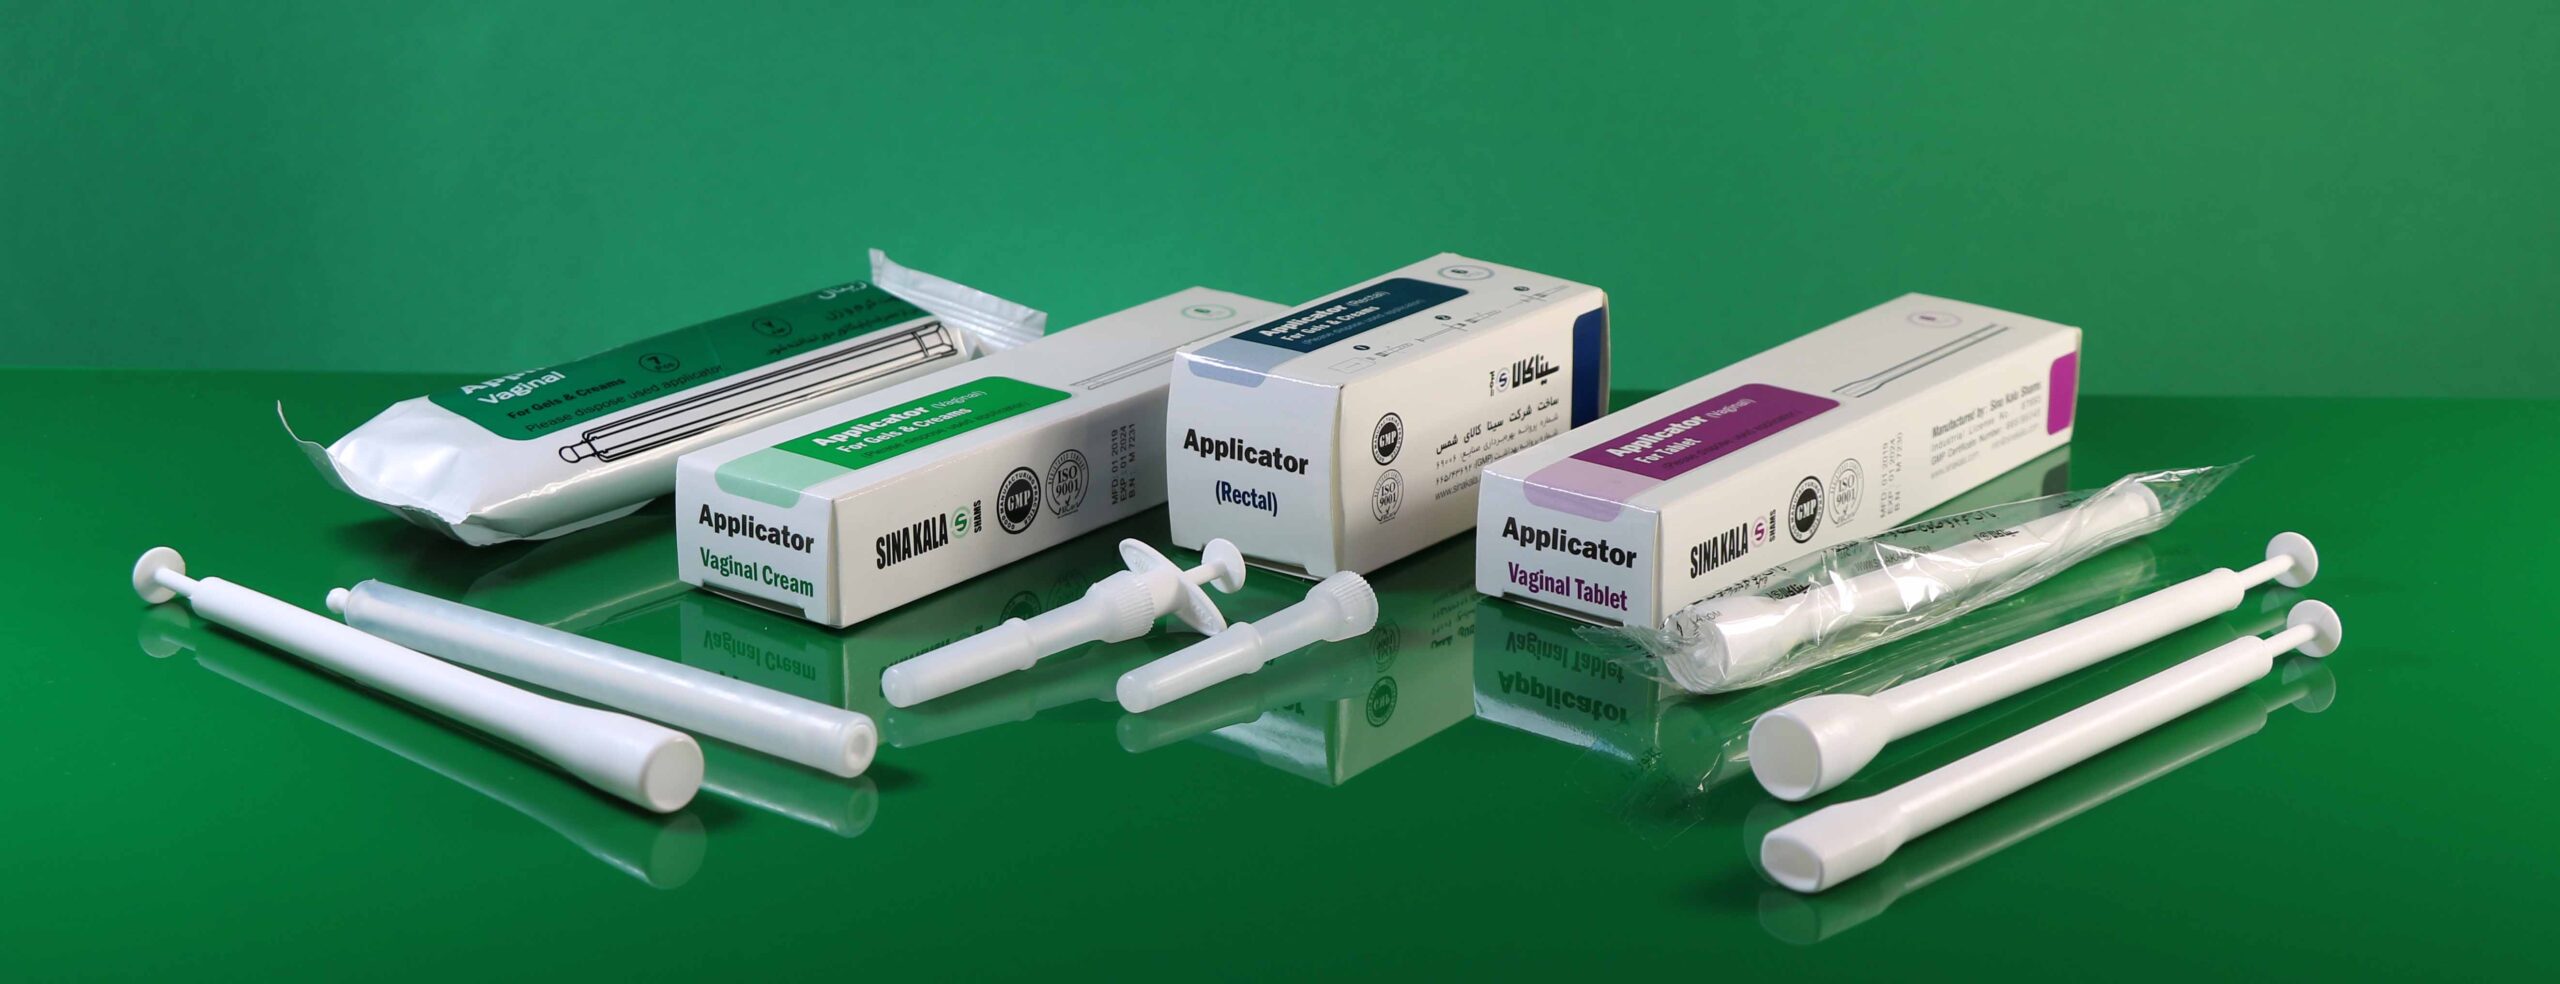 vaginal and rectal cream gel tablet suppository applicators  اپلیکاتور کرم و ژل و قرص و شیاف واژینال و رکتال